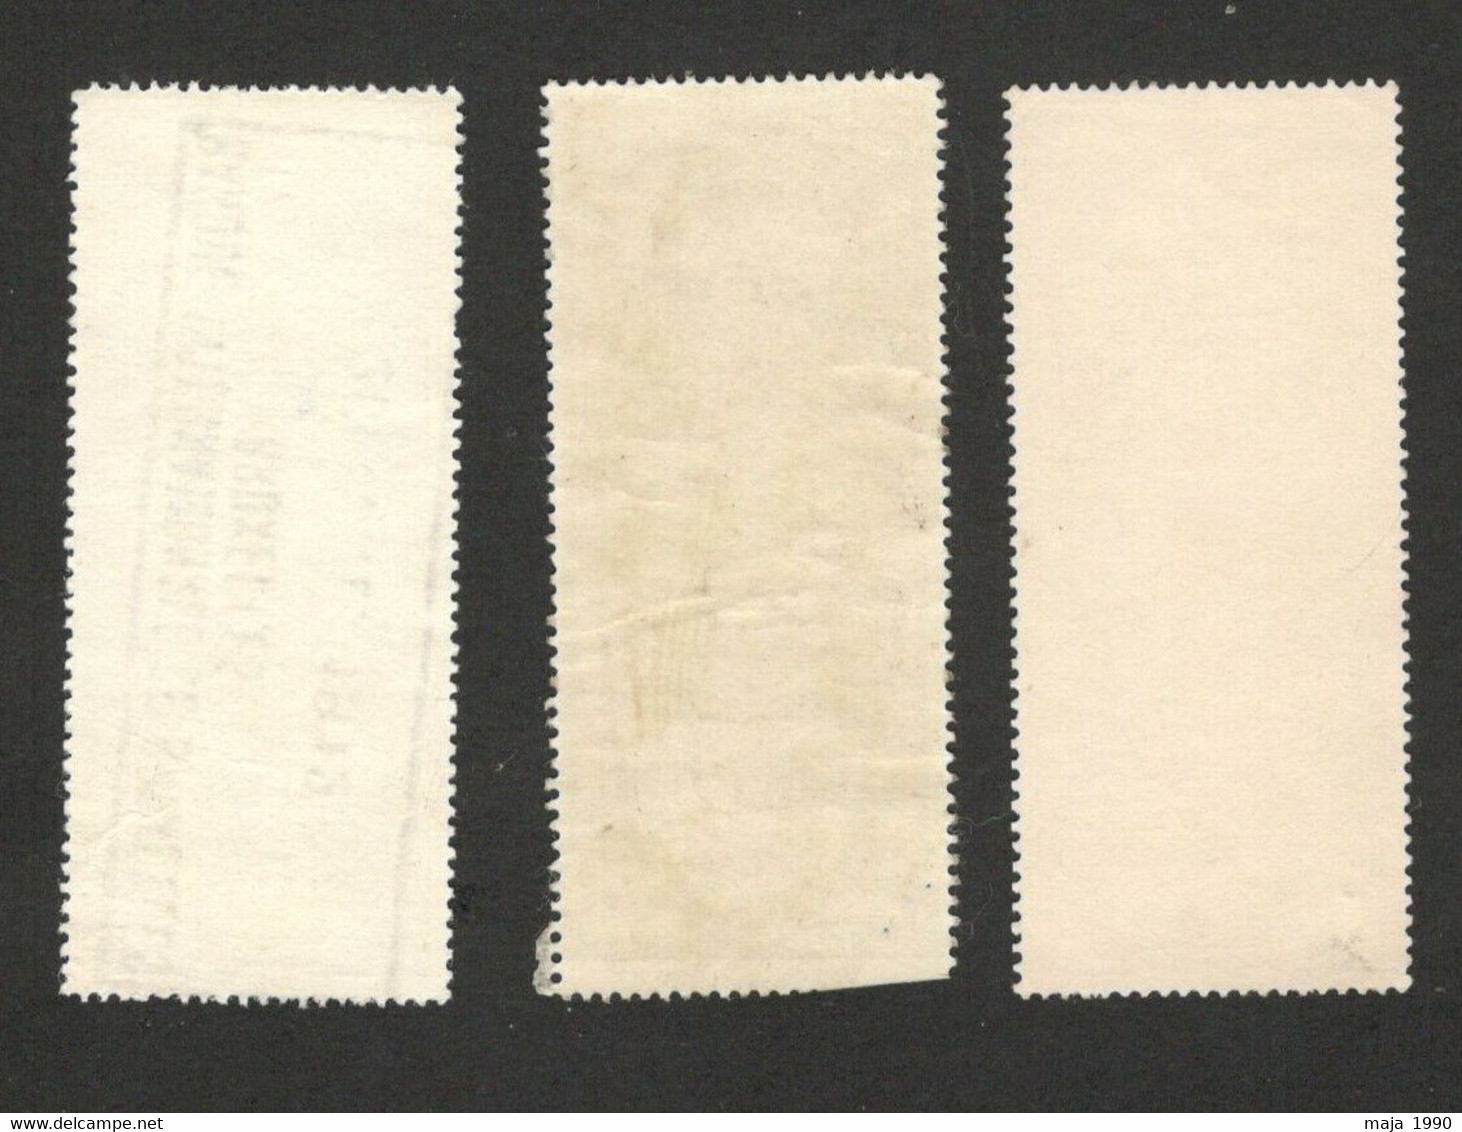 BELGIUM - 3 USED OLD REVENU STAMPS (9) - Stamps